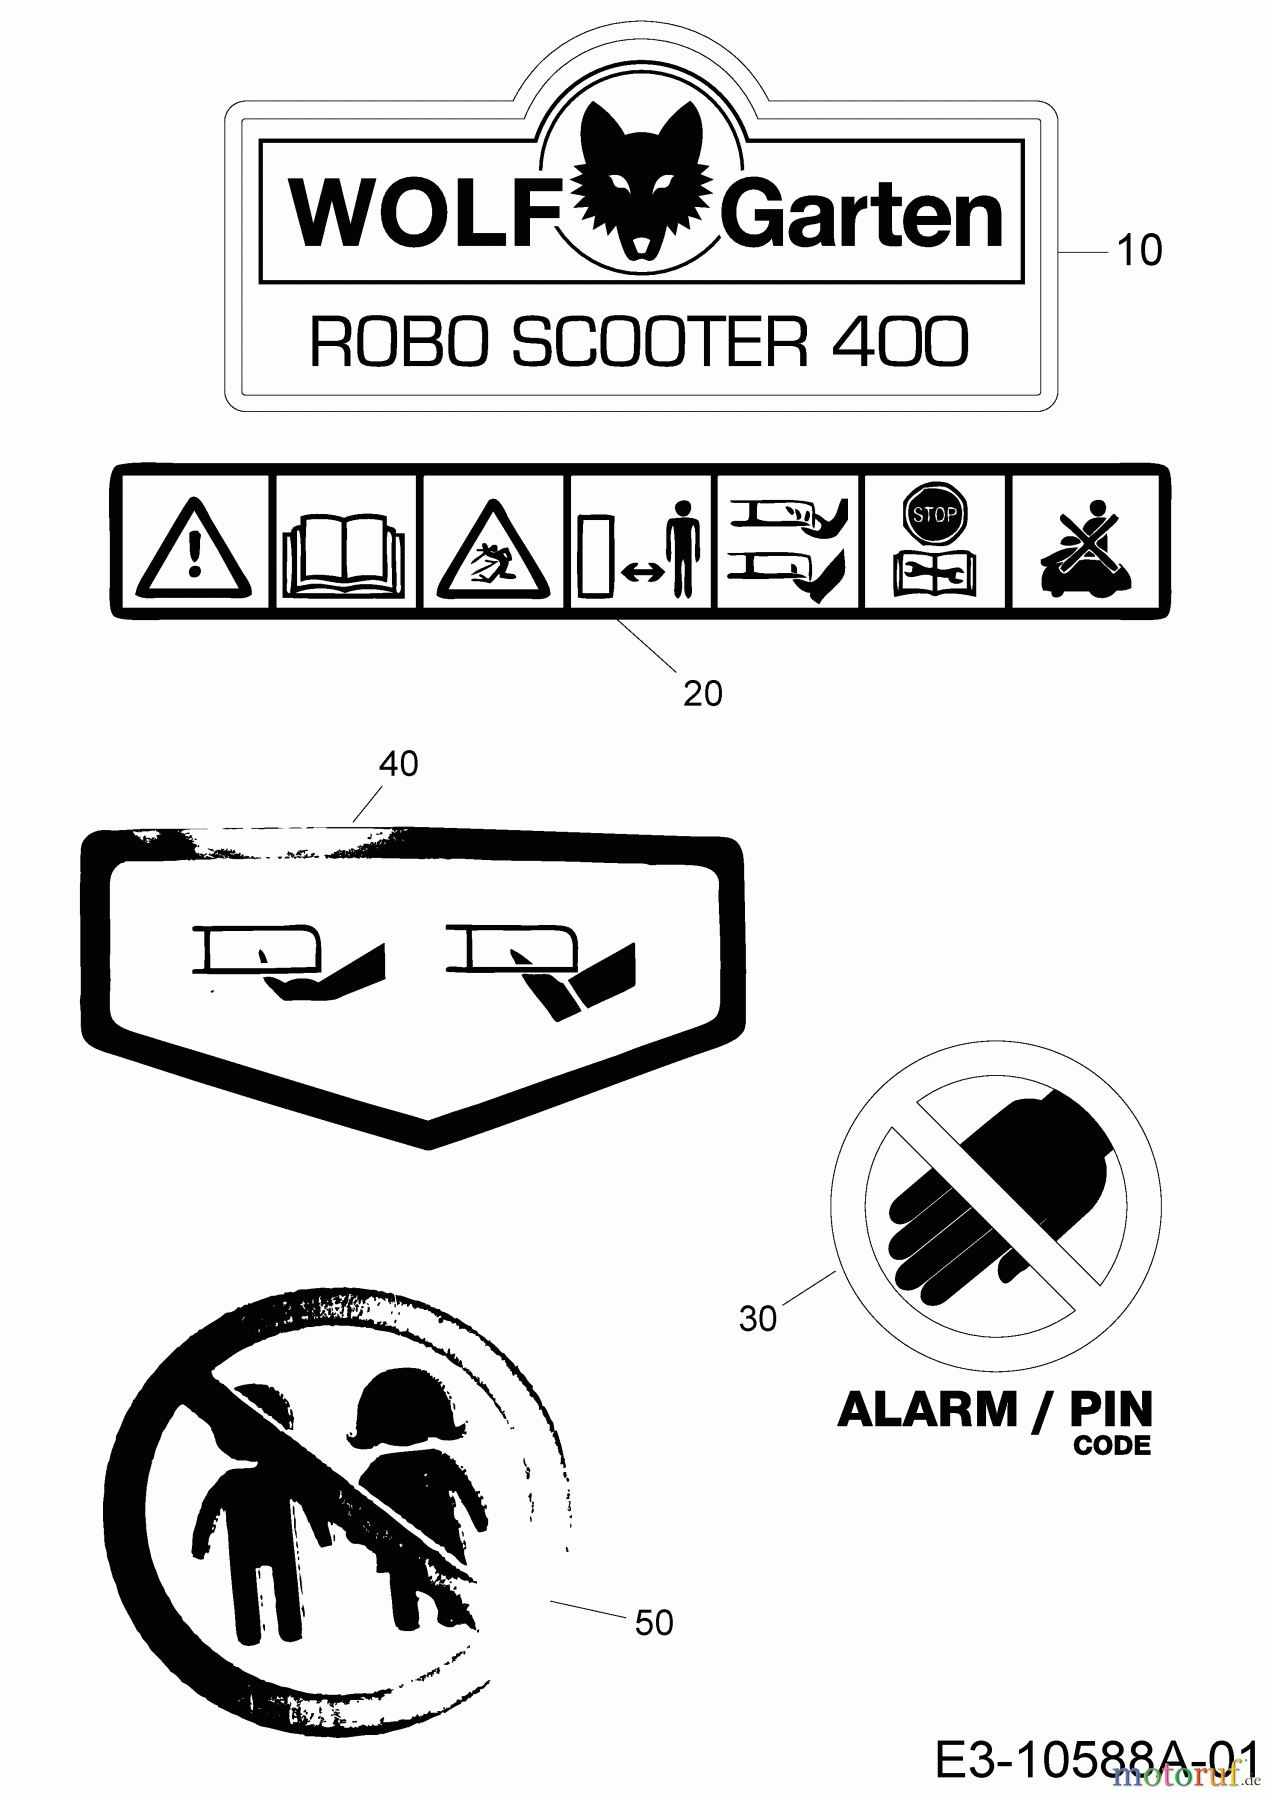  Wolf-Garten Robotic lawn mower Robo Scooter 400 18BO04LF650  (2015) Labels